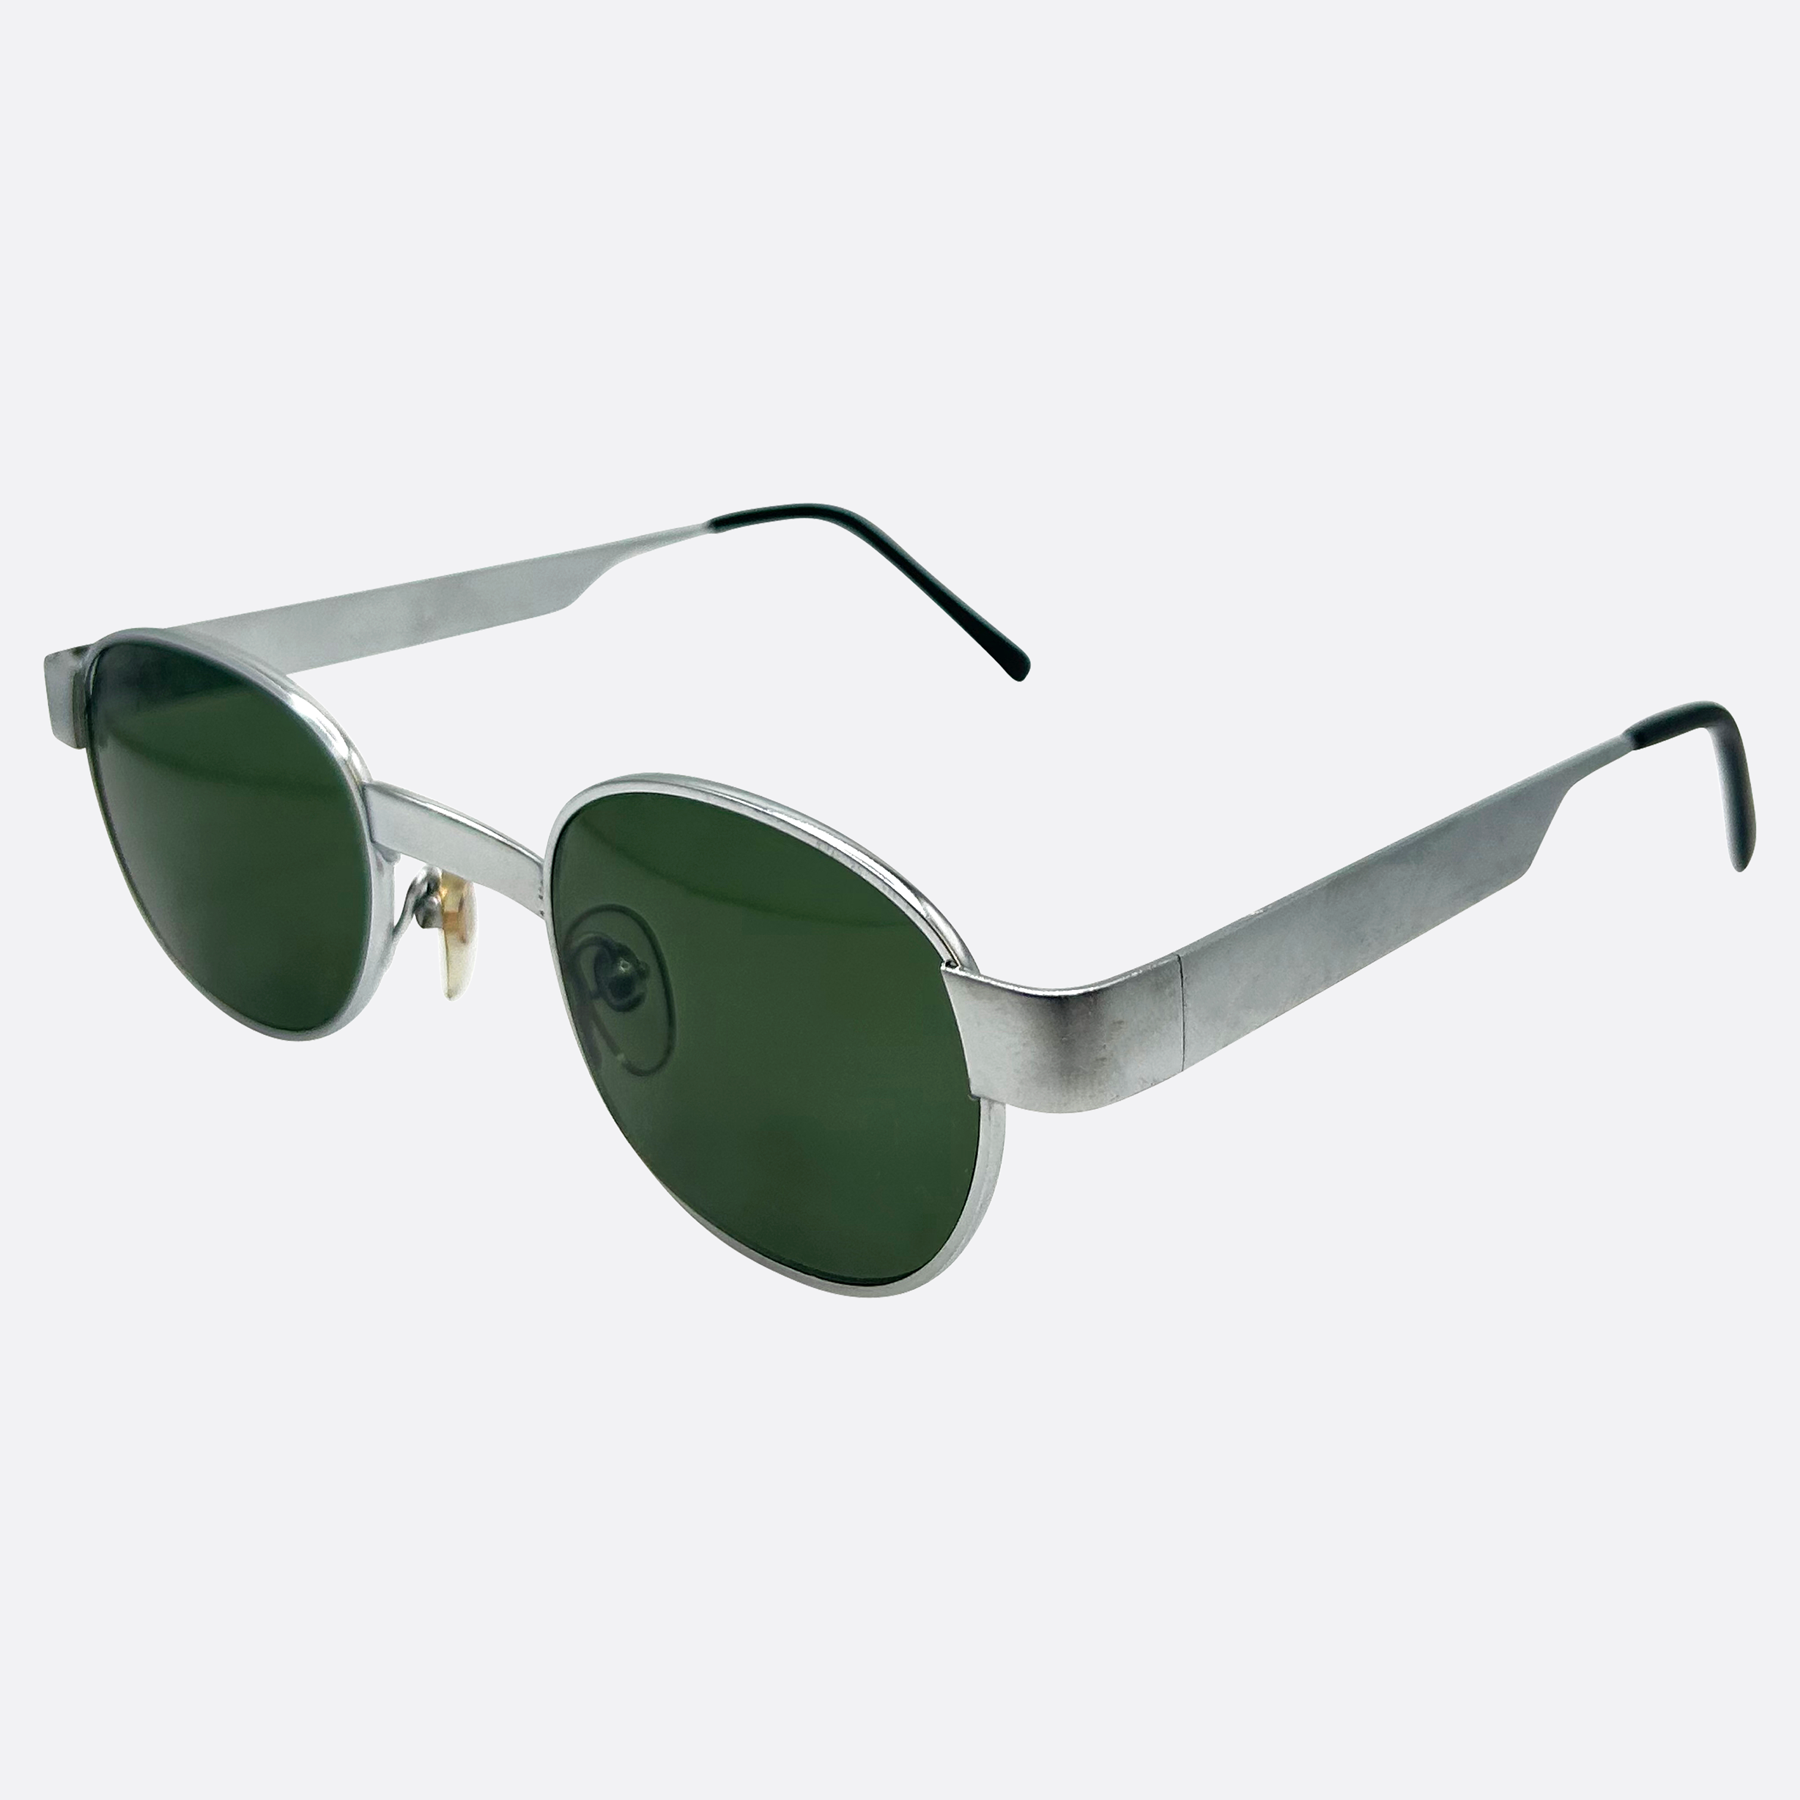 BASK Classic Round Retro Sunglasses | Luxe Vintage